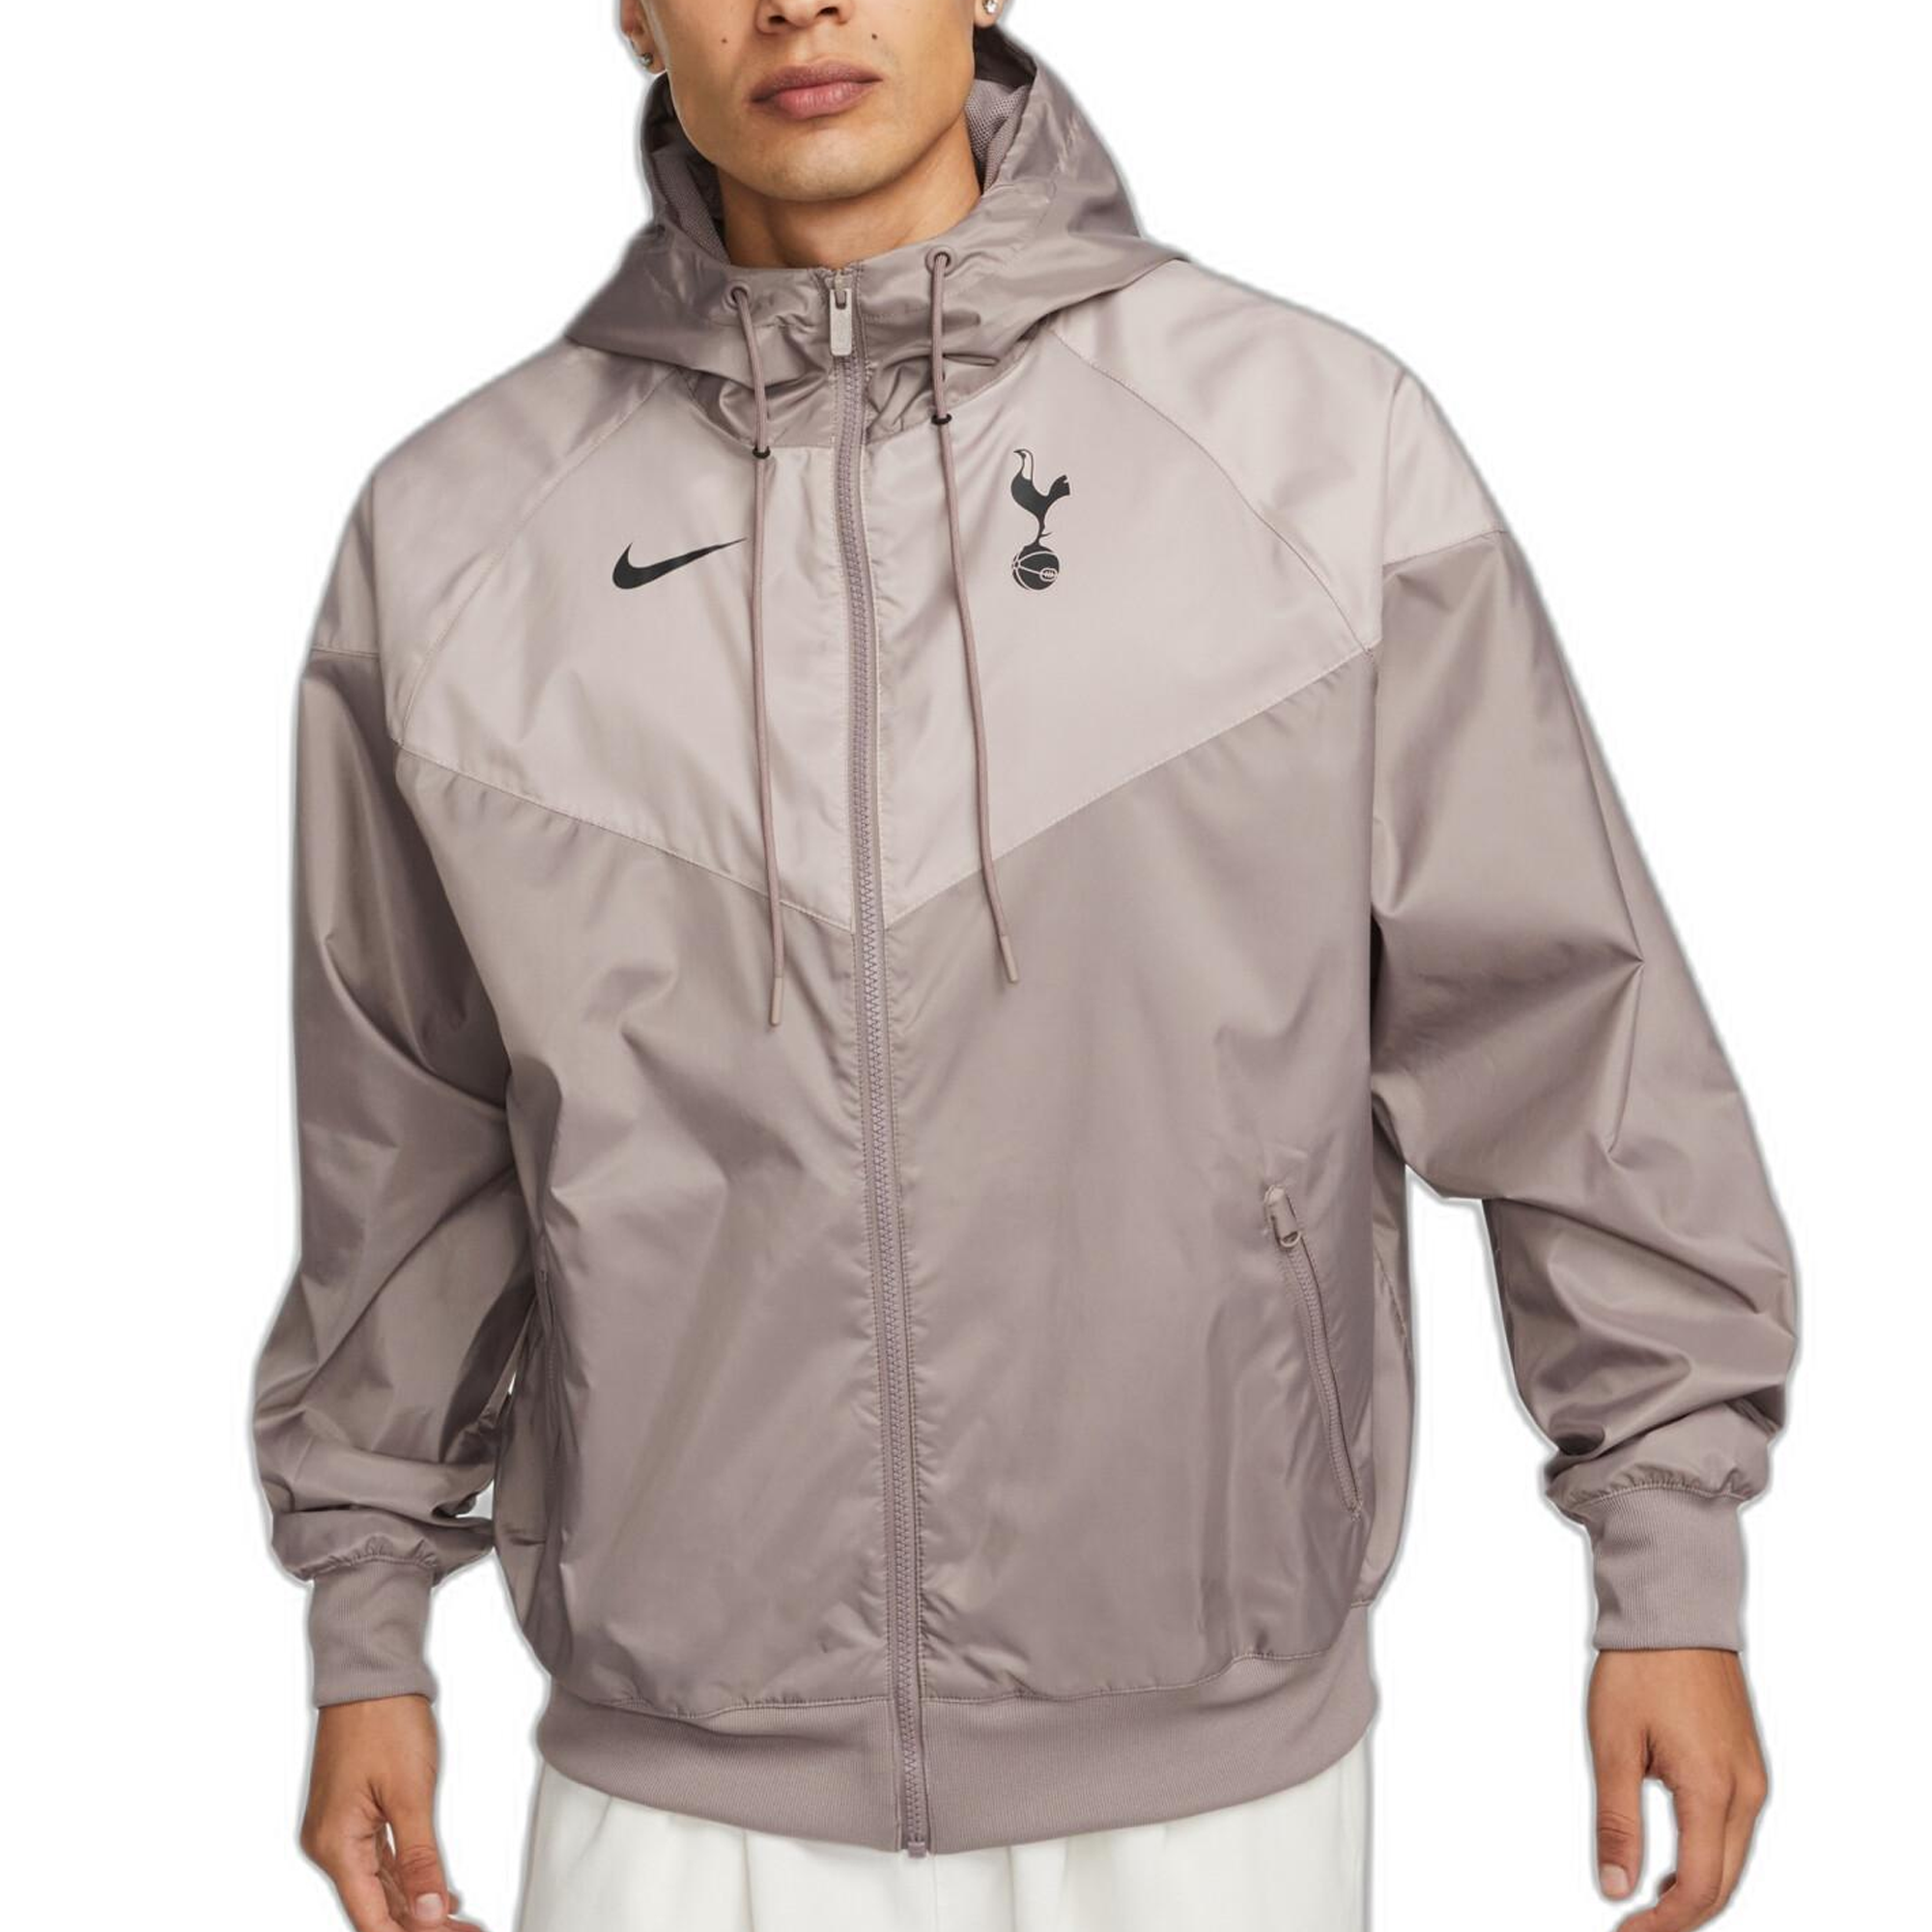 Nike Men's Team Windrunner Jacket Black/Wolf Grey, XL